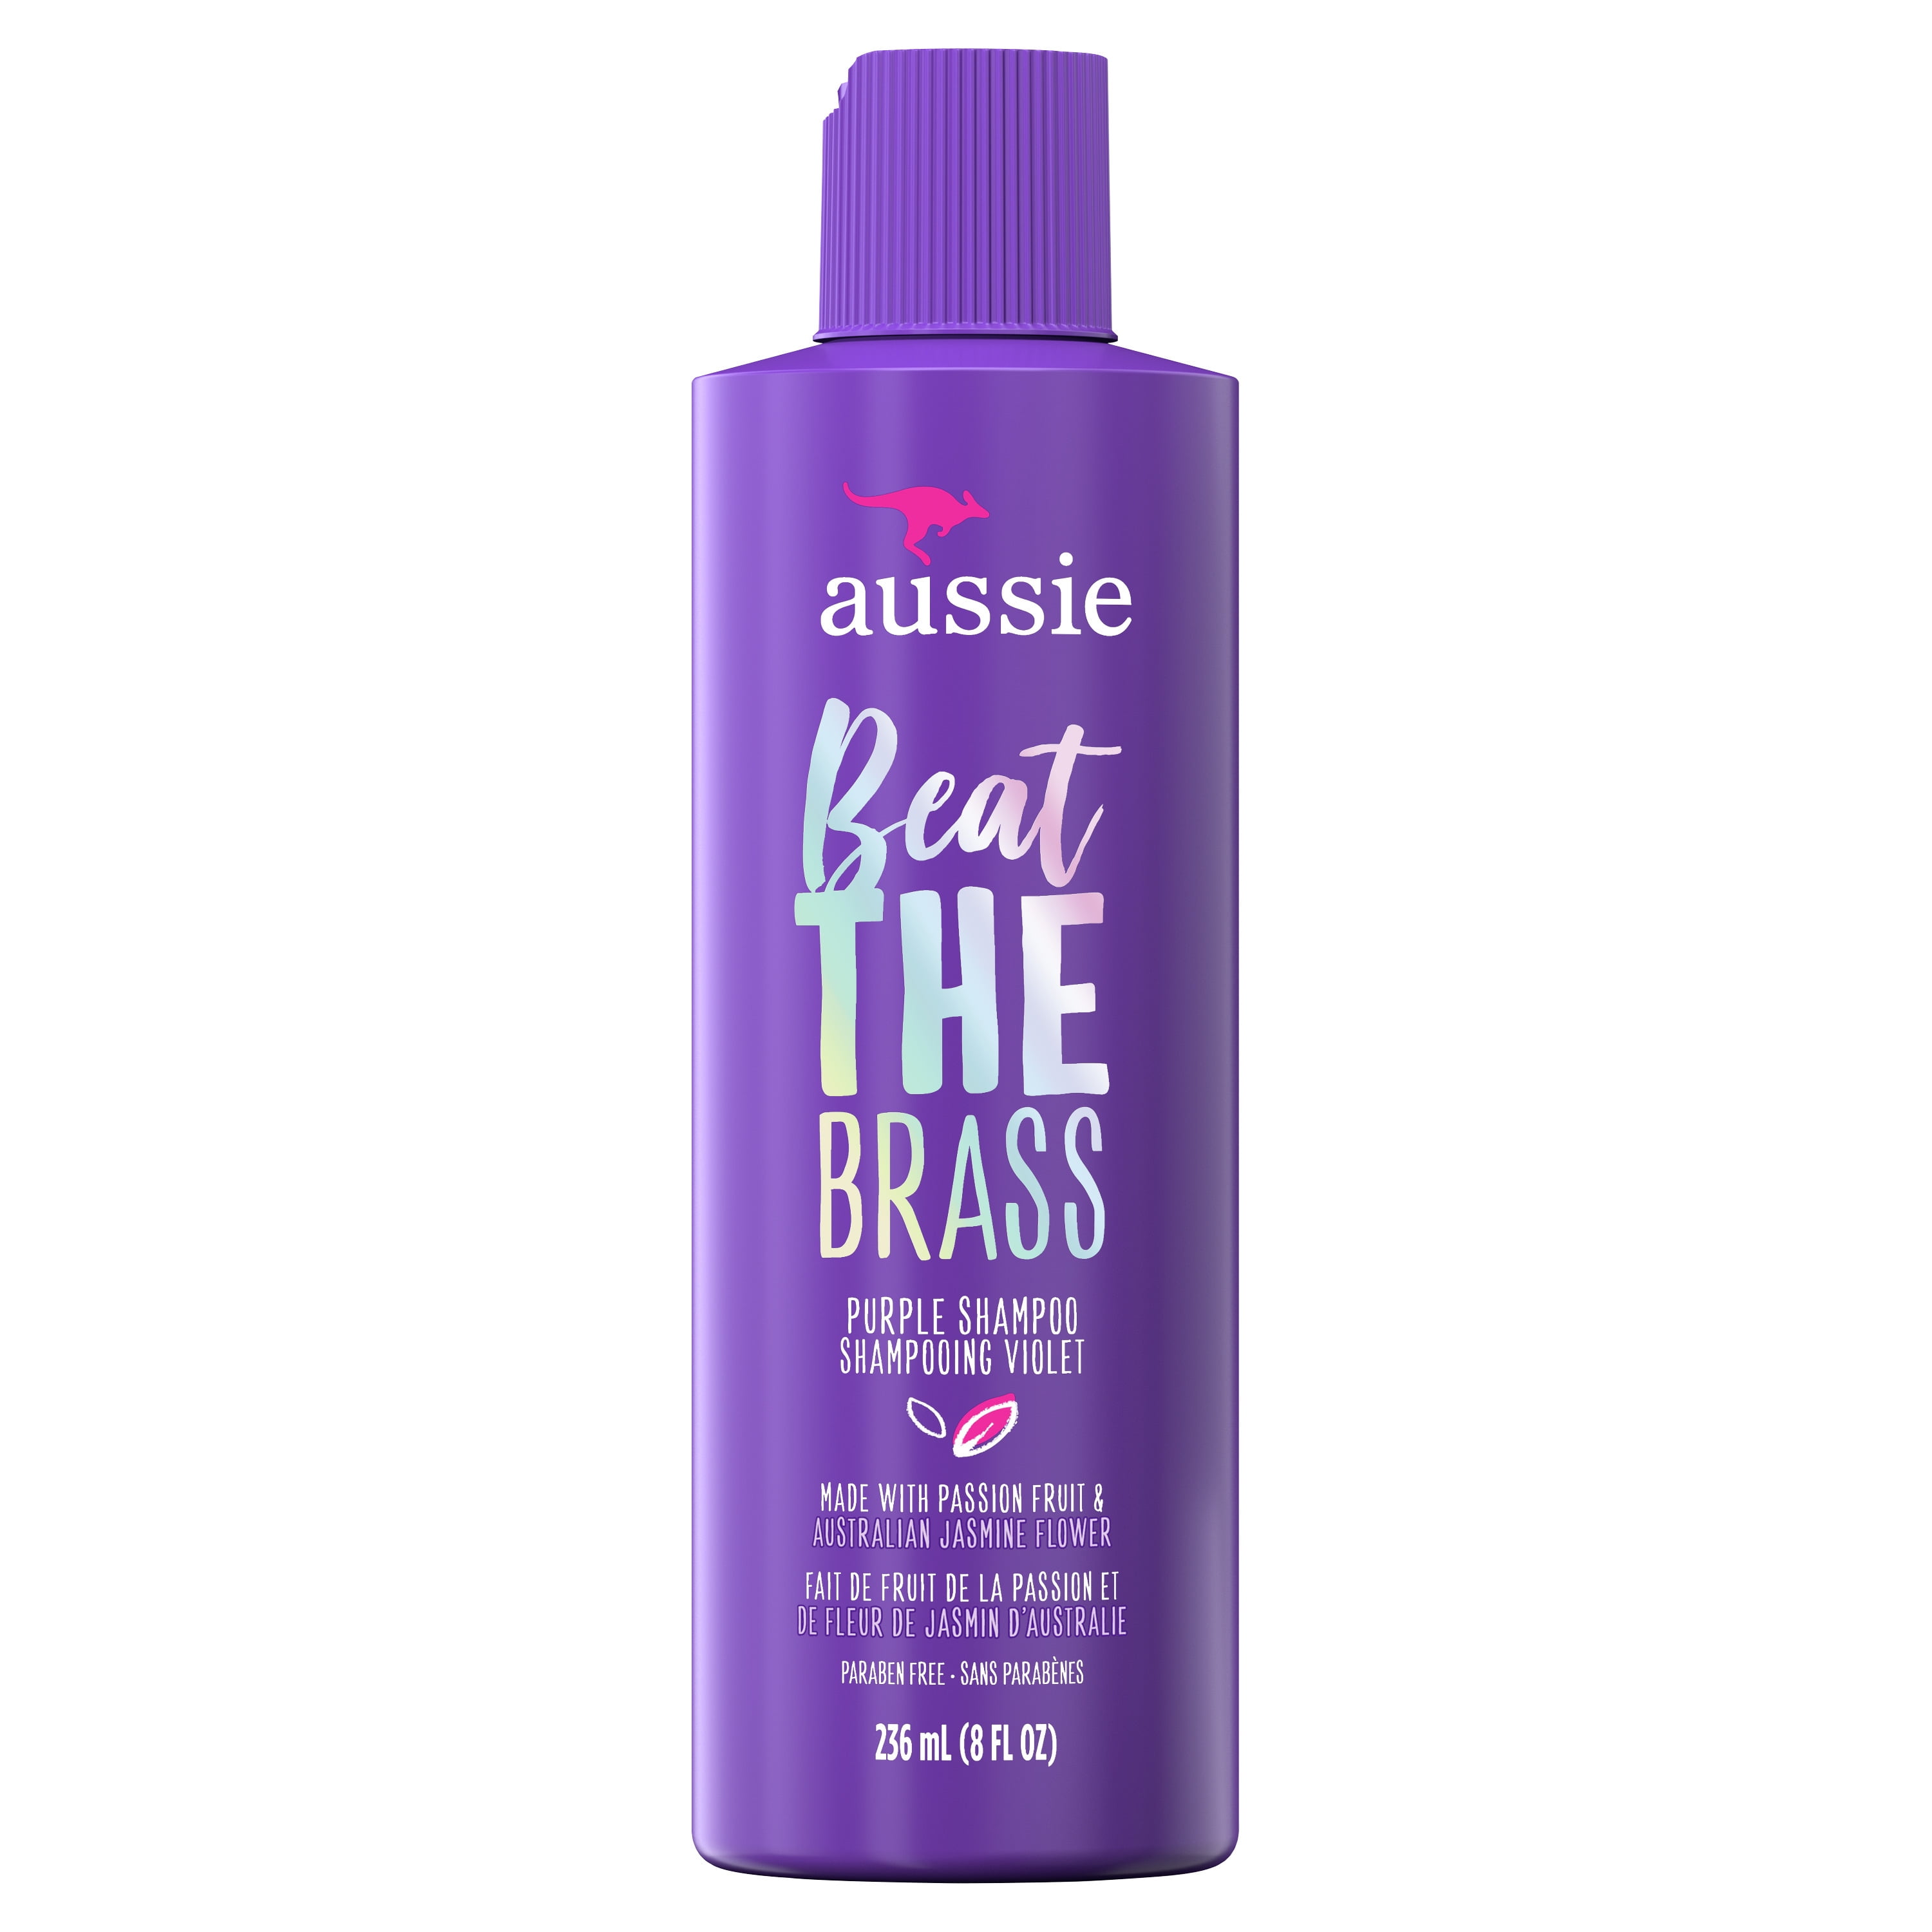 Aussie Beat the Brass Purple Shampoo for Color-Treated Hair, 8 fl oz